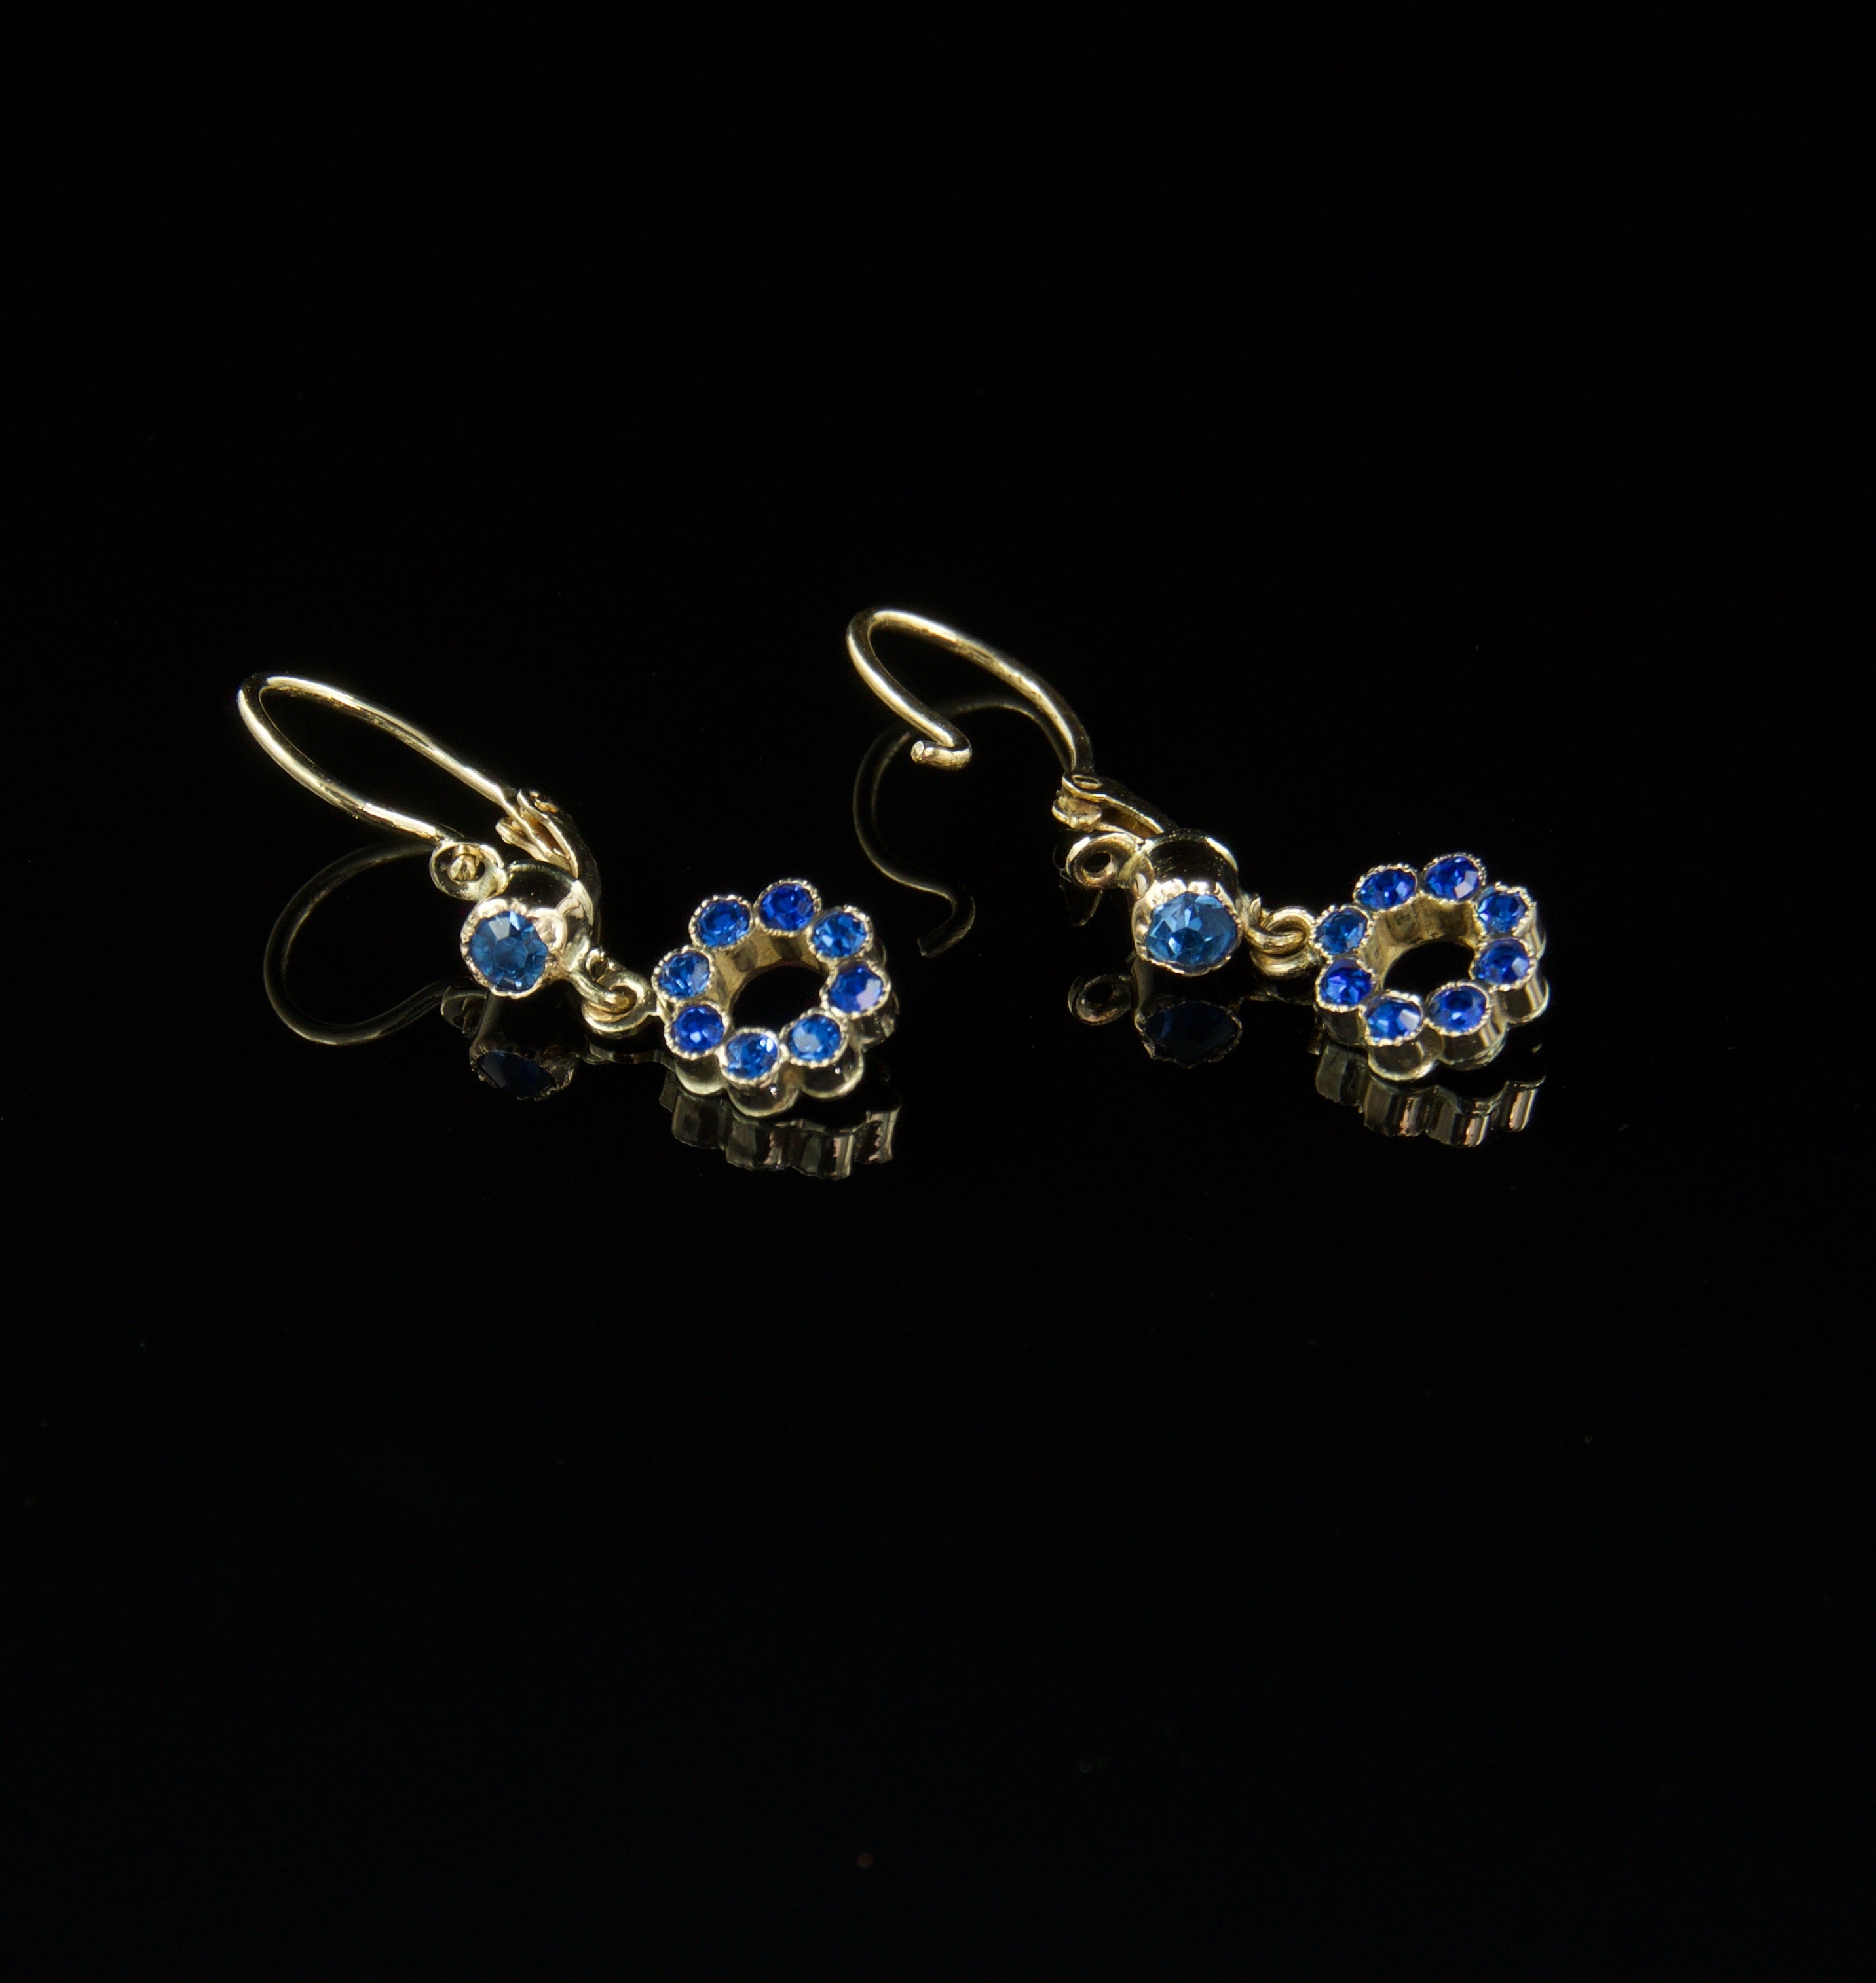 Antique Blue Gem Dangle Earrings In 14k Gold